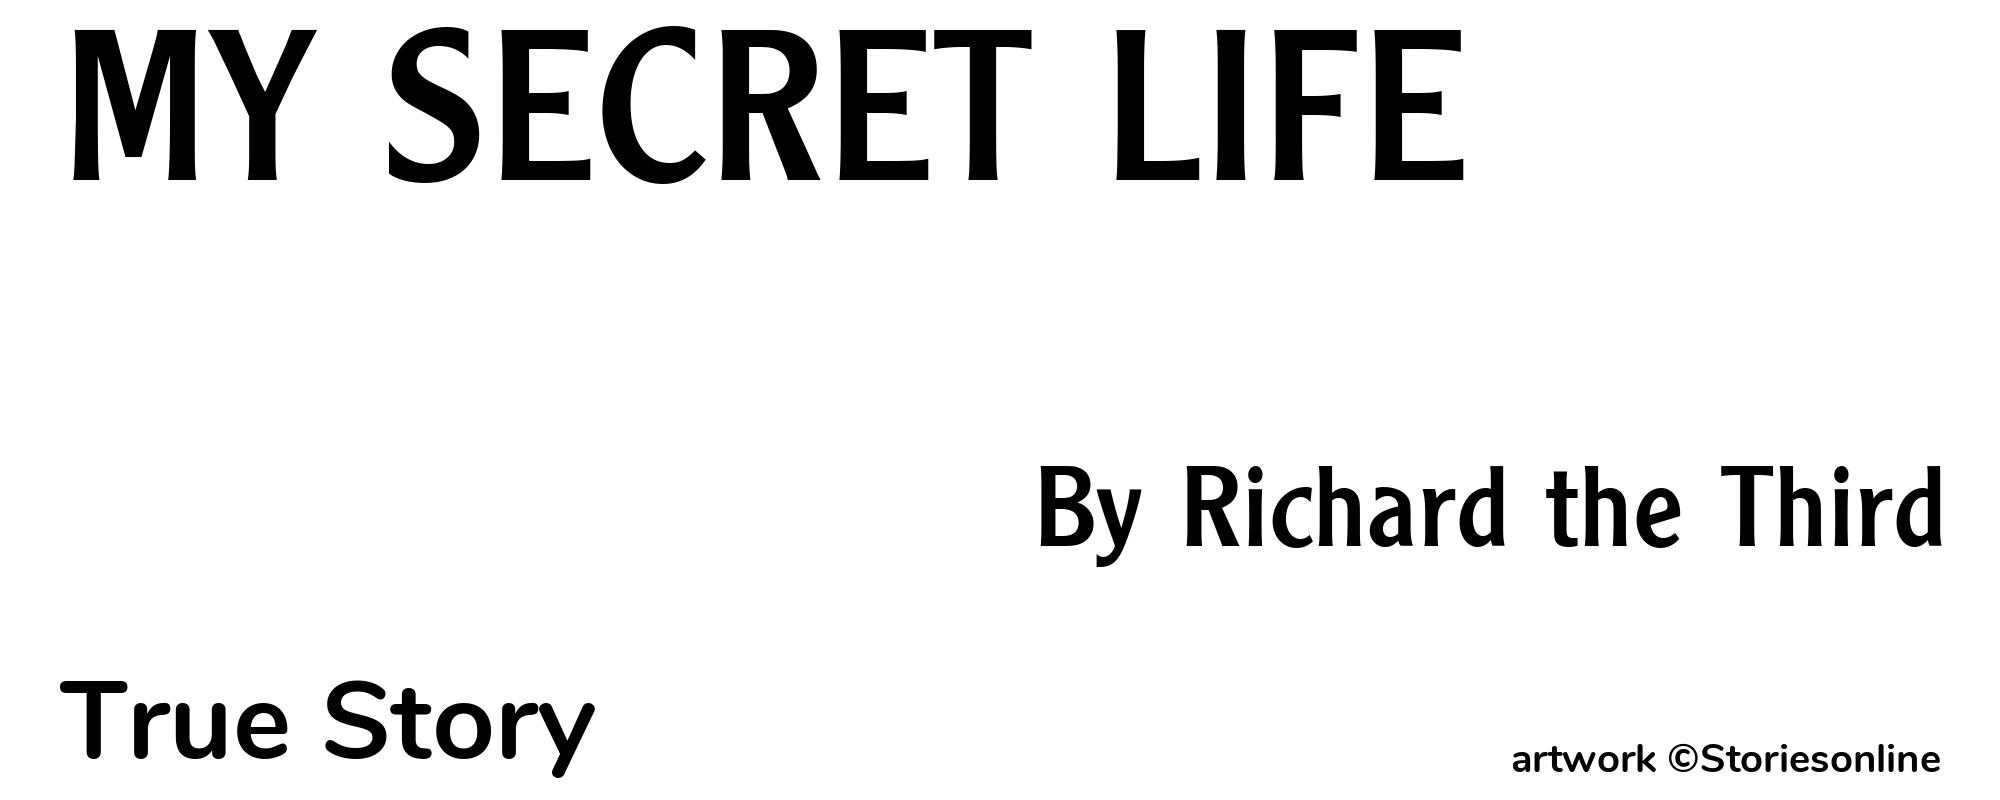 MY SECRET LIFE - Cover